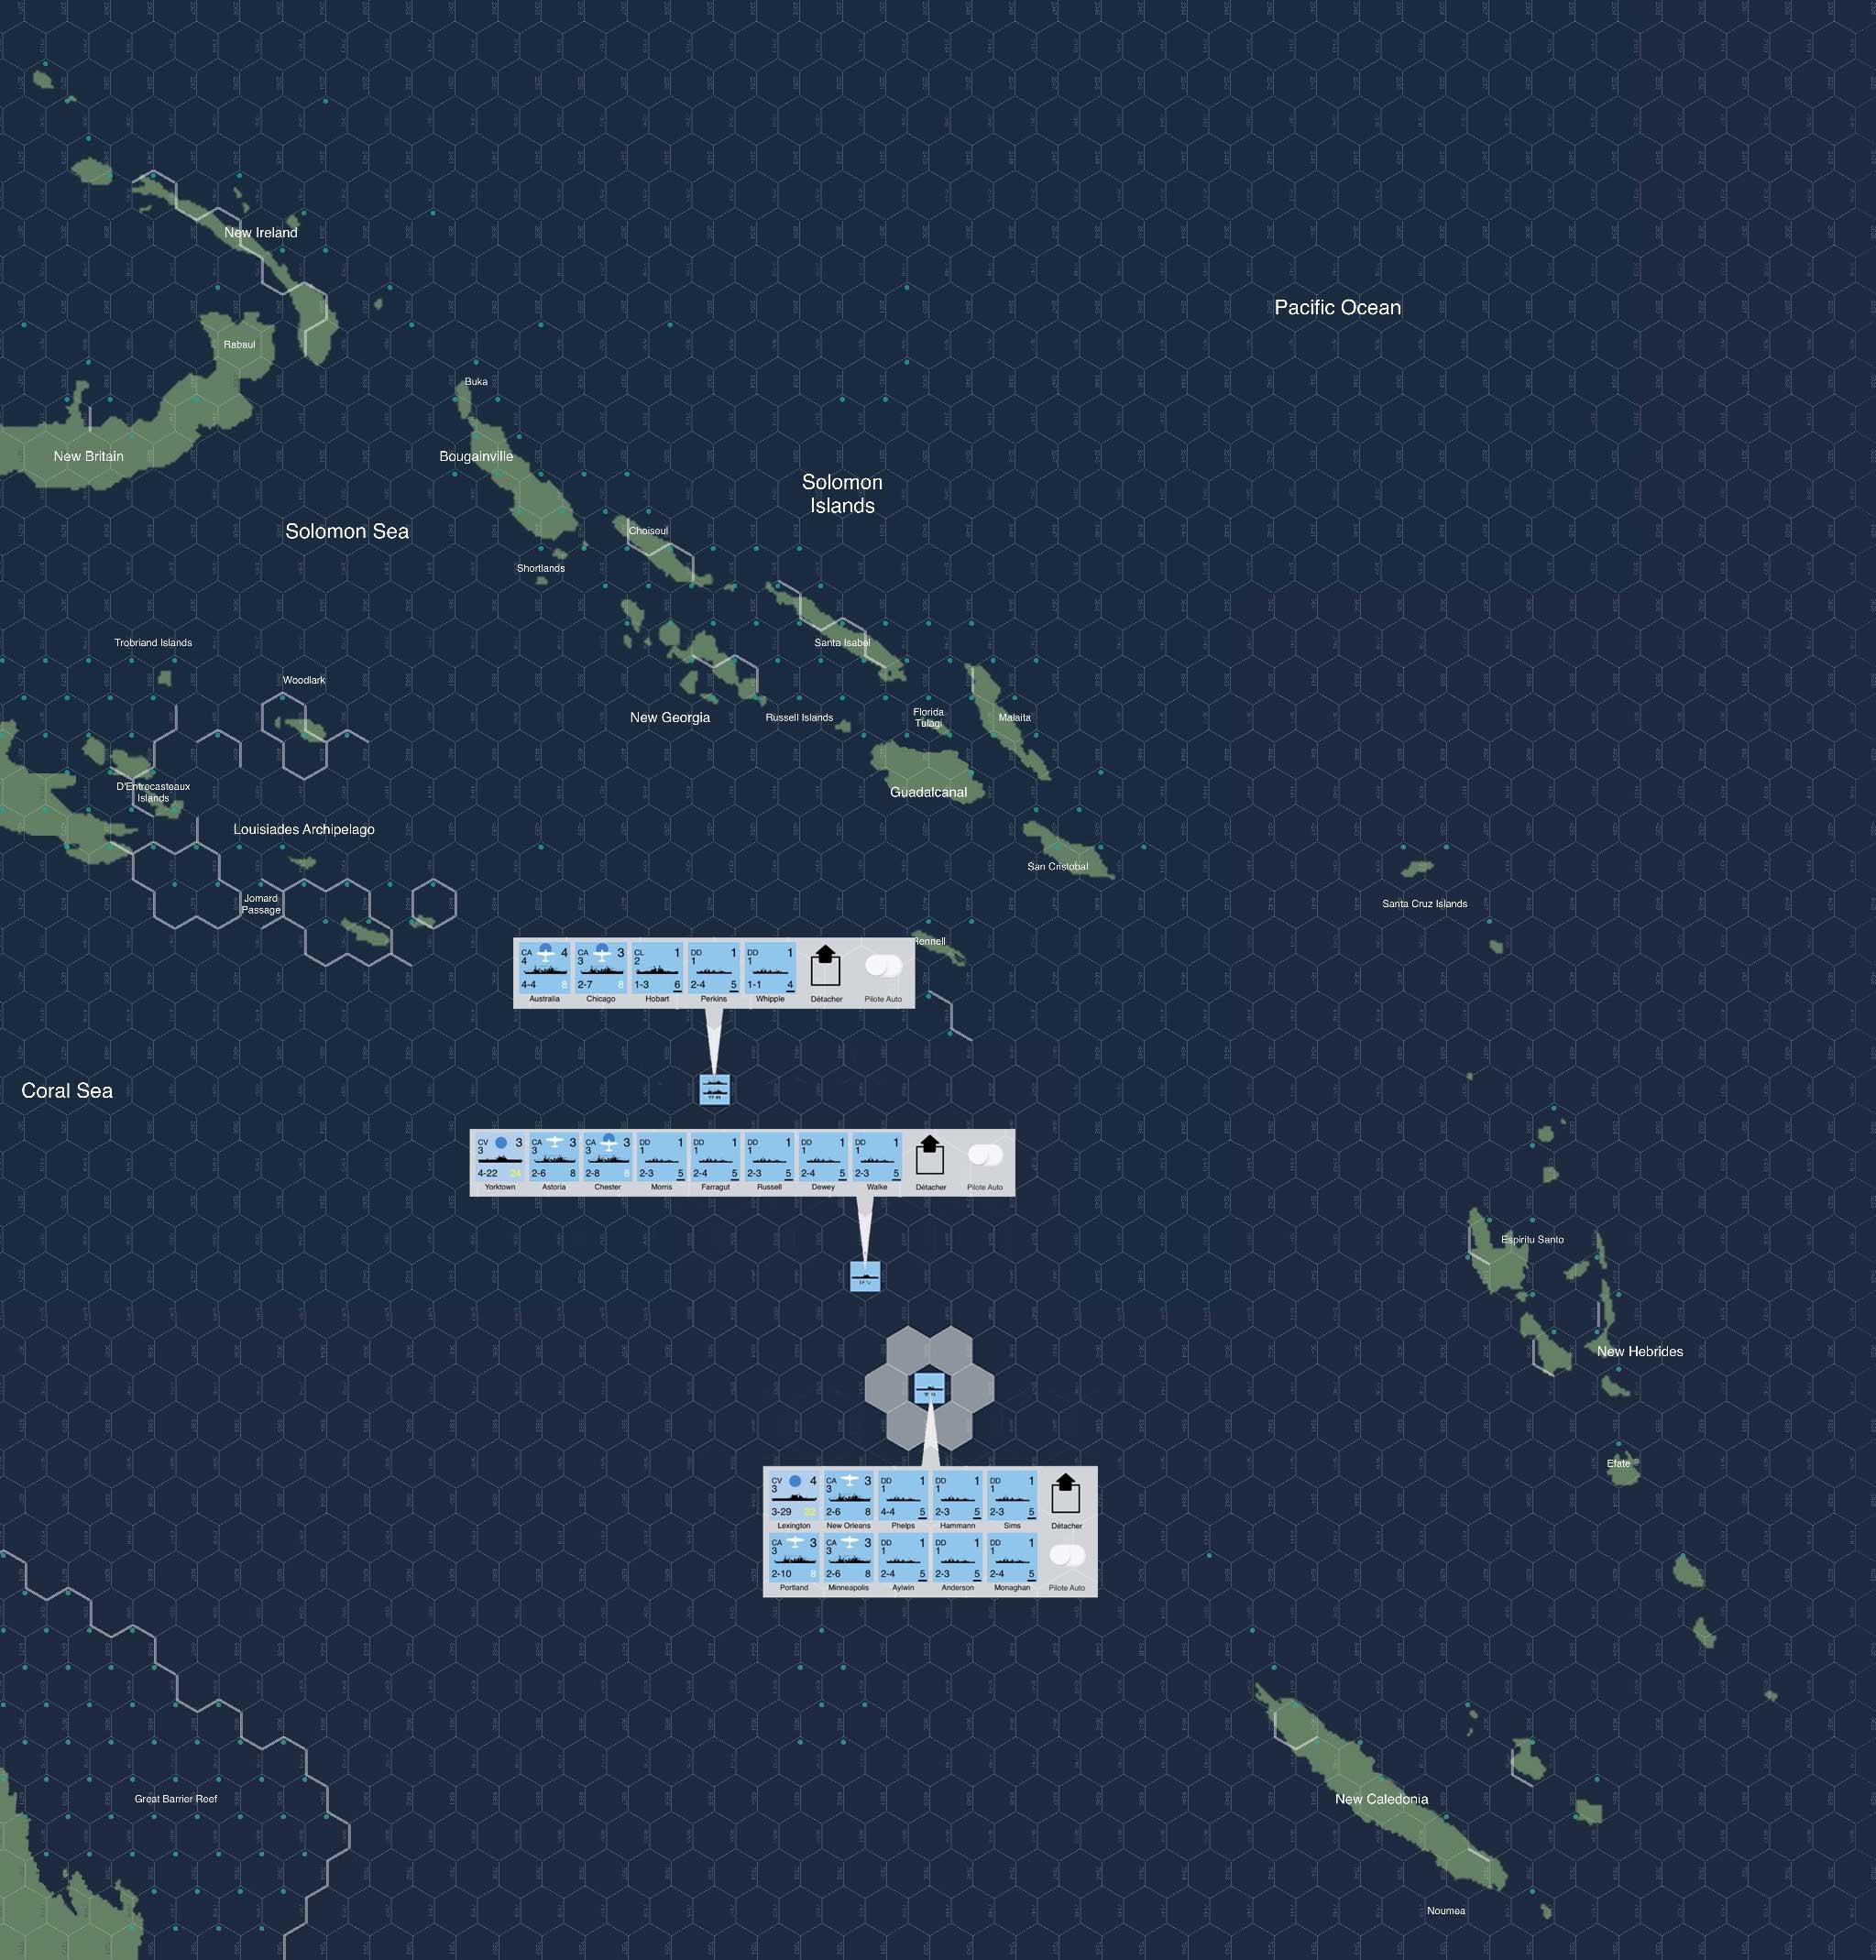 Carrier Battles for Guadalcanal